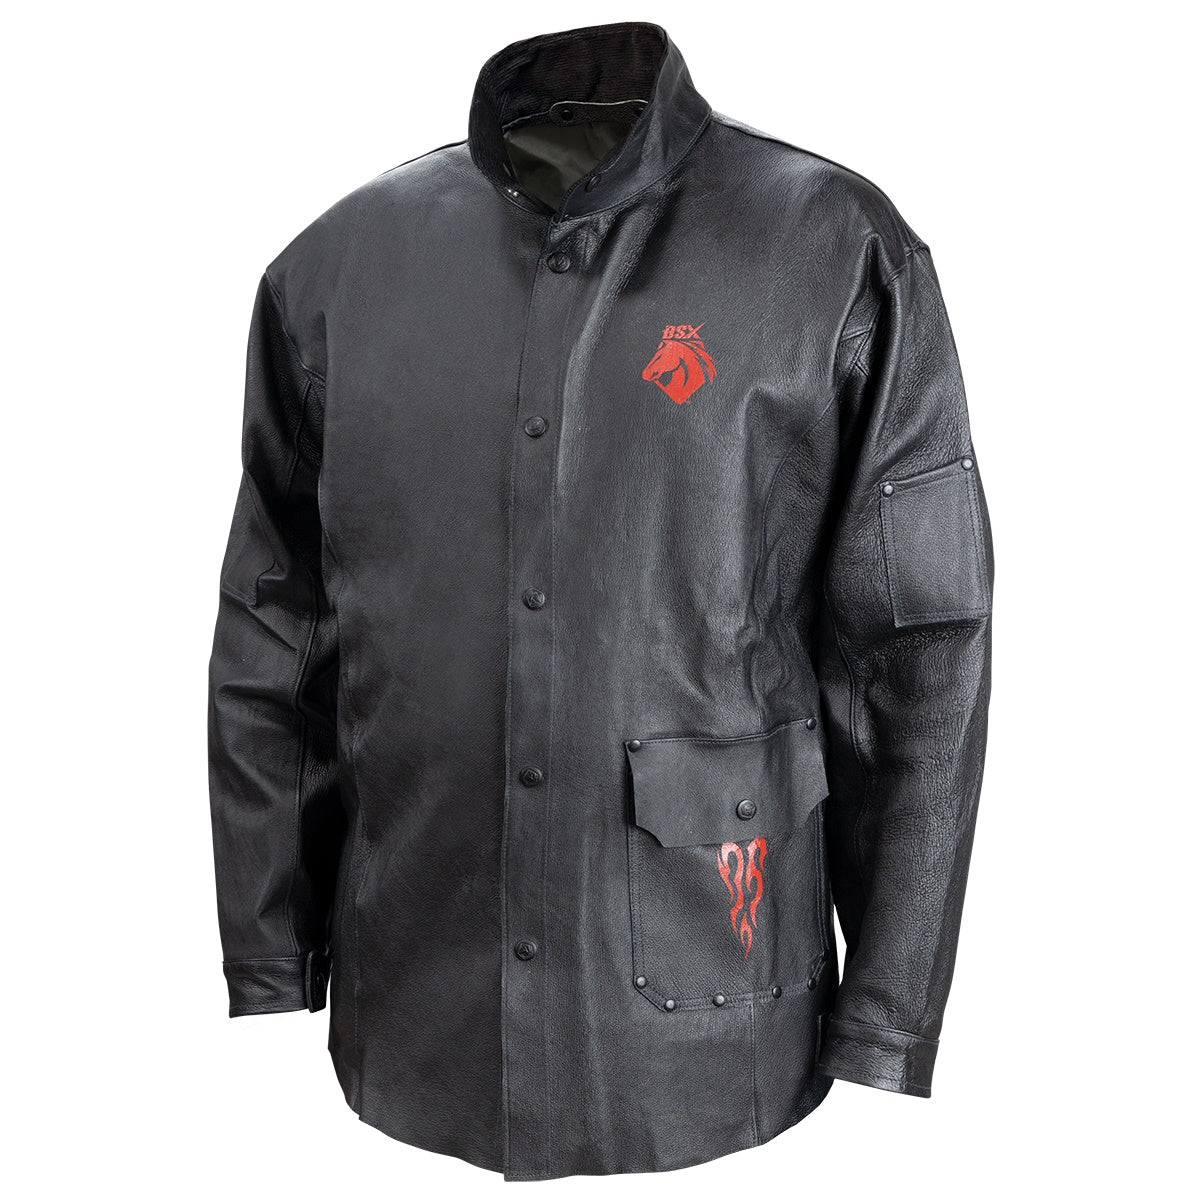 Revco Black Stallion BSX Contoured Leather Welding Jacket (JL2035-BK)